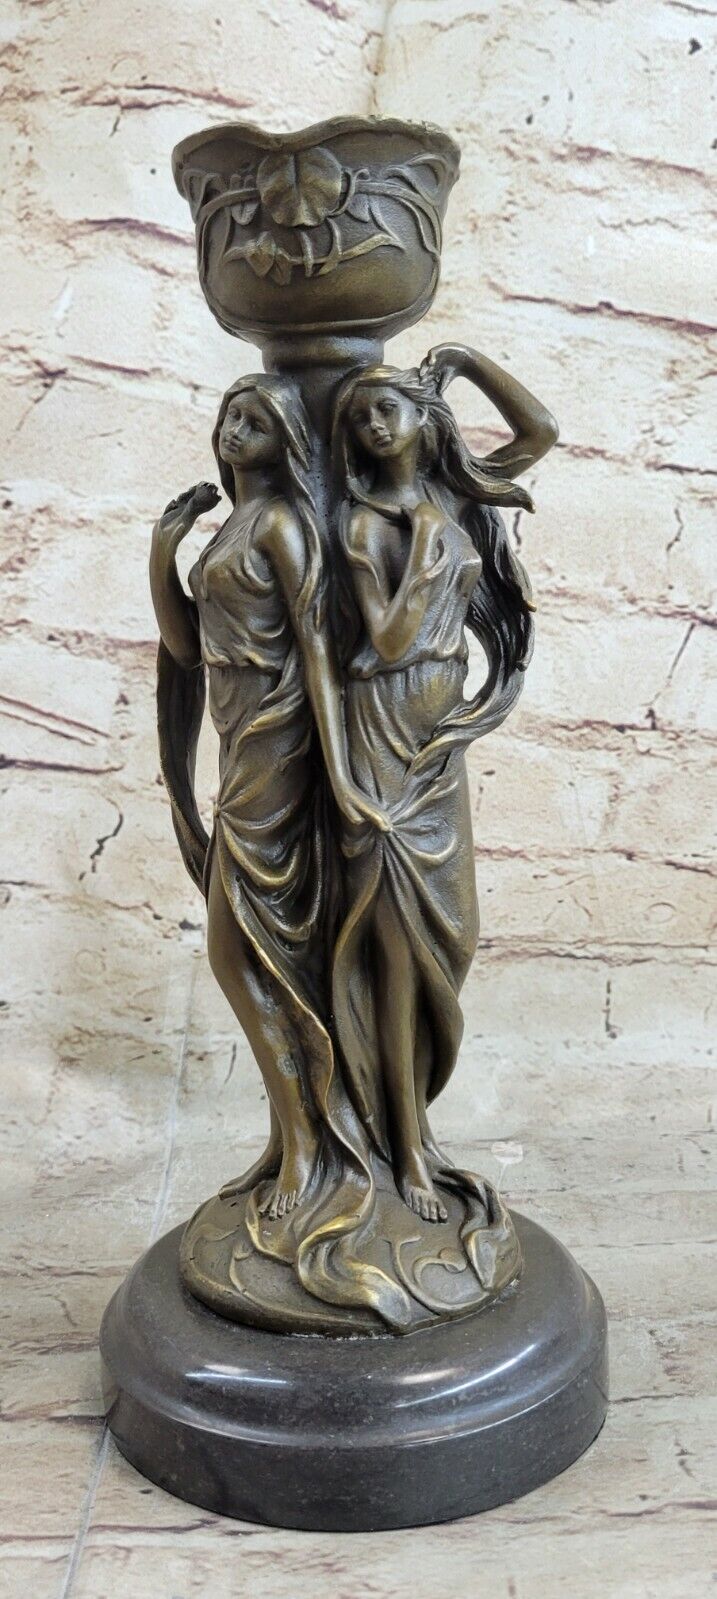 Real Large Semi Nude Twins Candelabra Candle Holder Bronze Sculpture Statue Sale